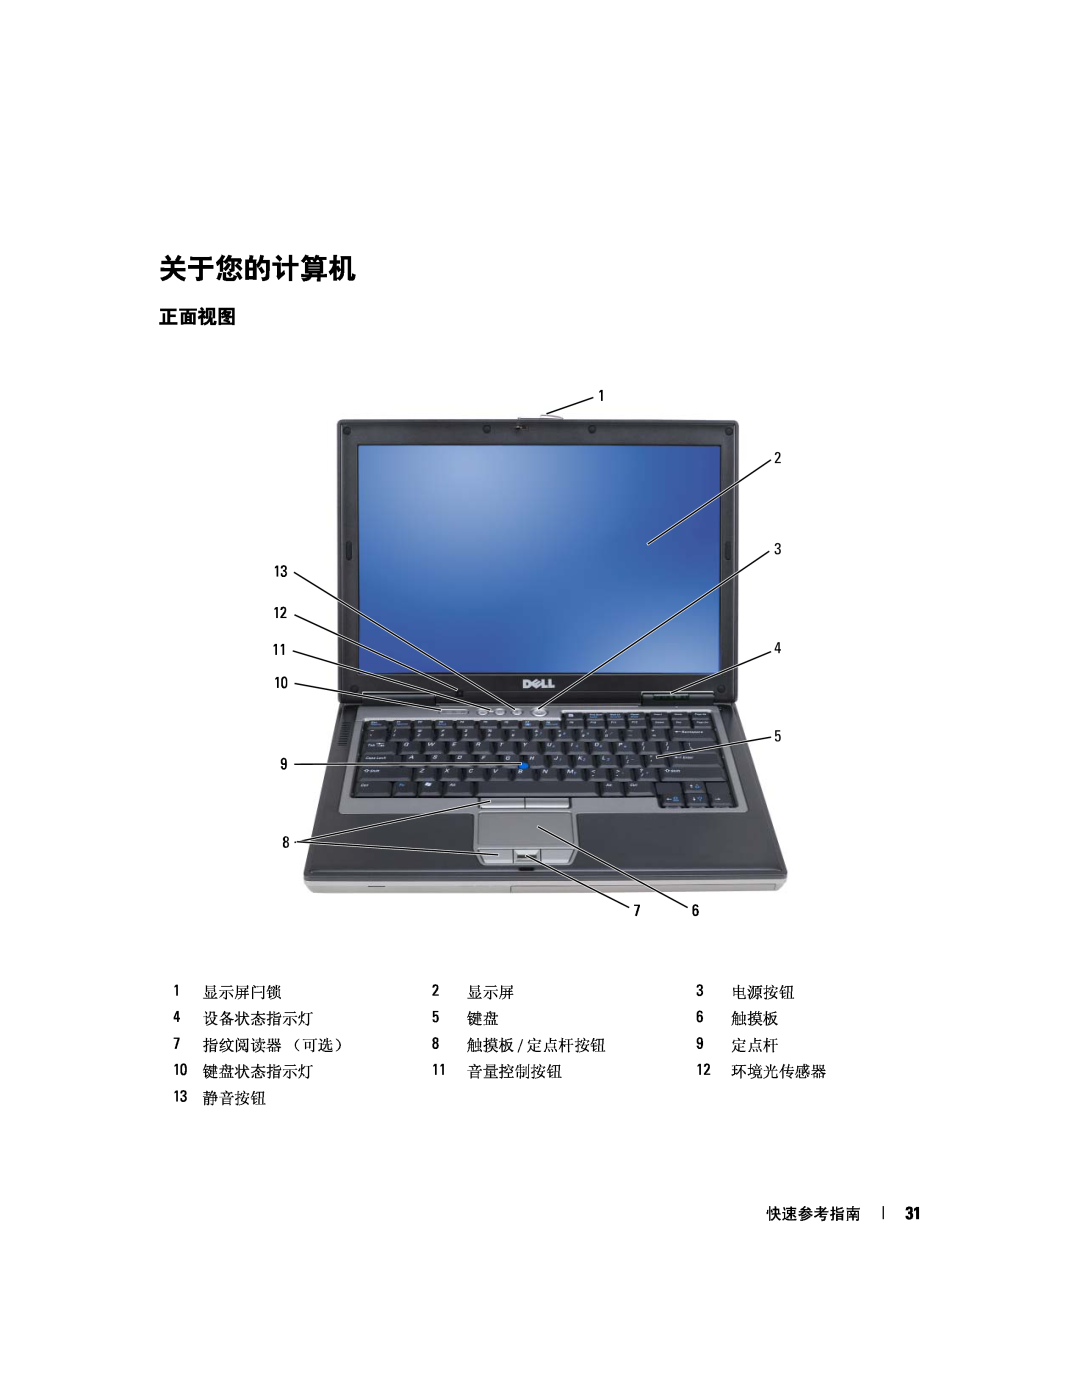 Dell D631, XP140 manual 关于您的计算机, 正面视图 